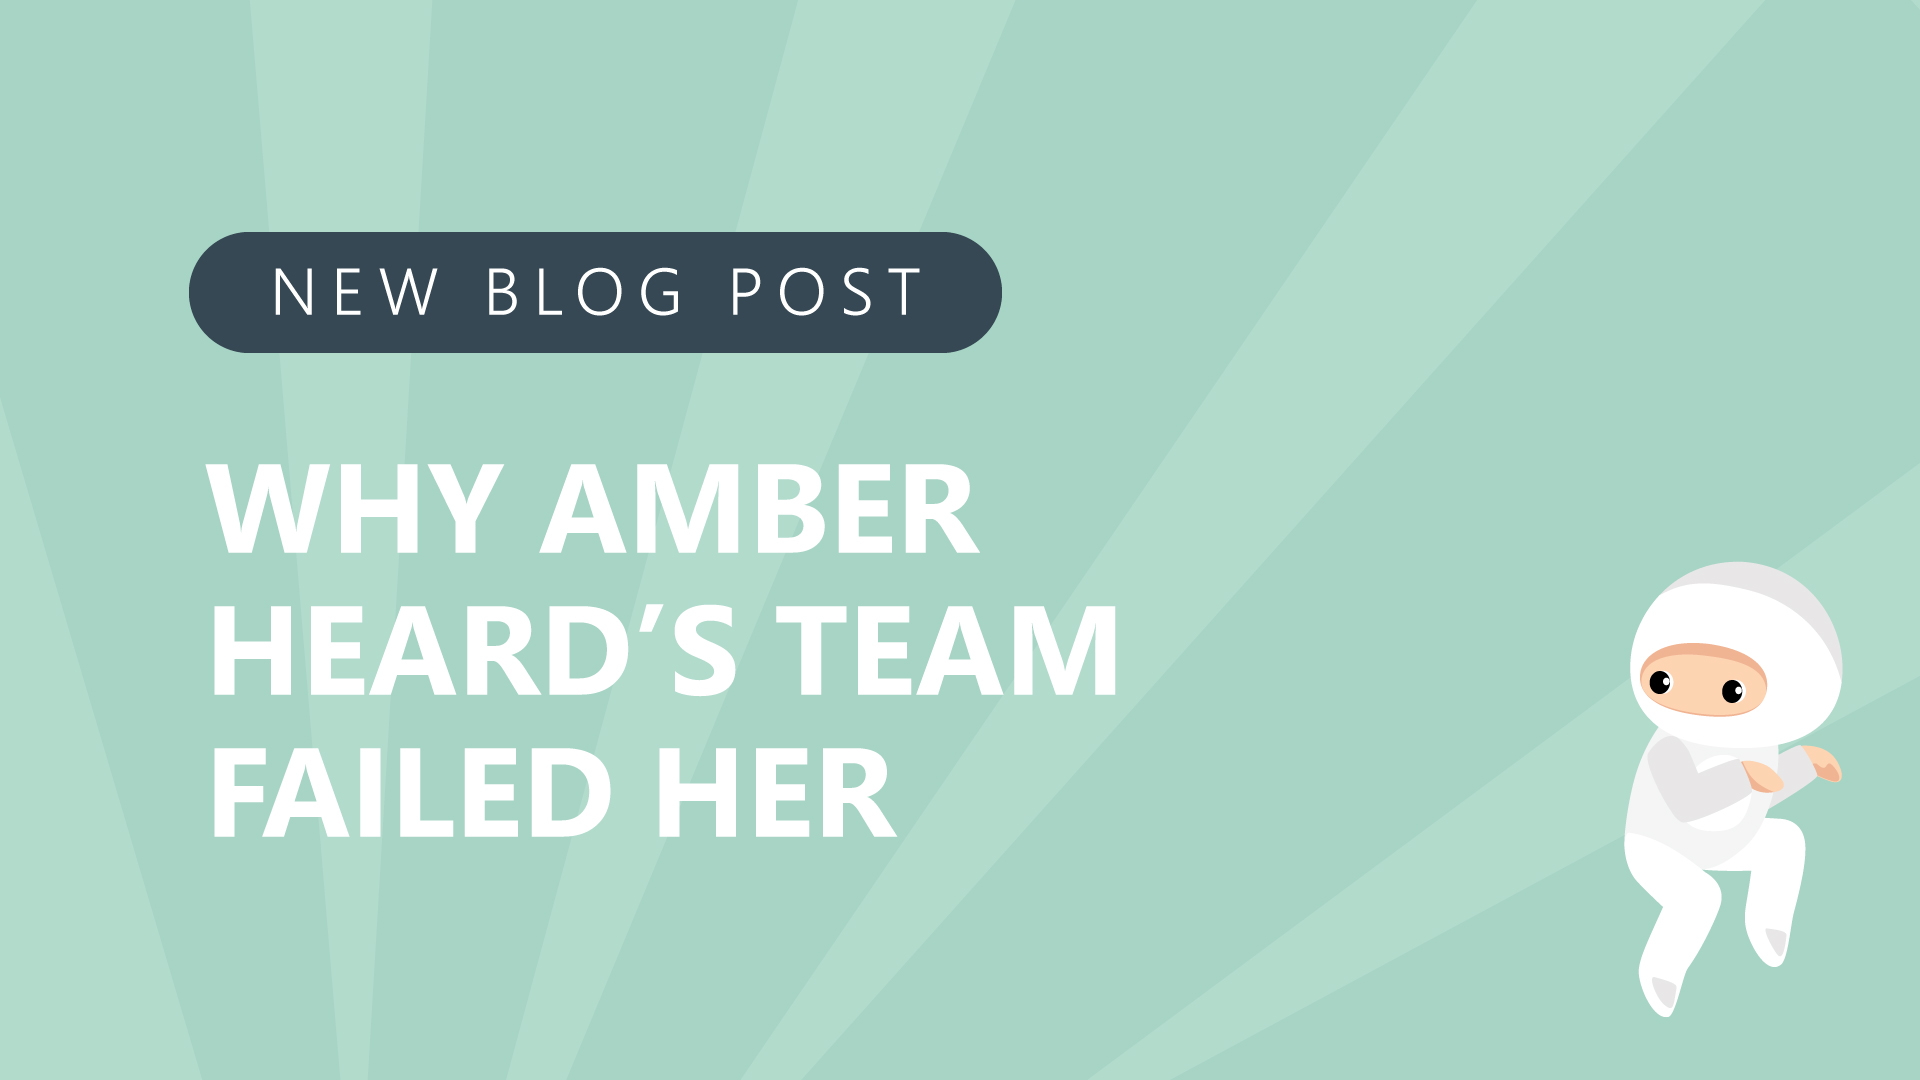 Why amber heards team failed her